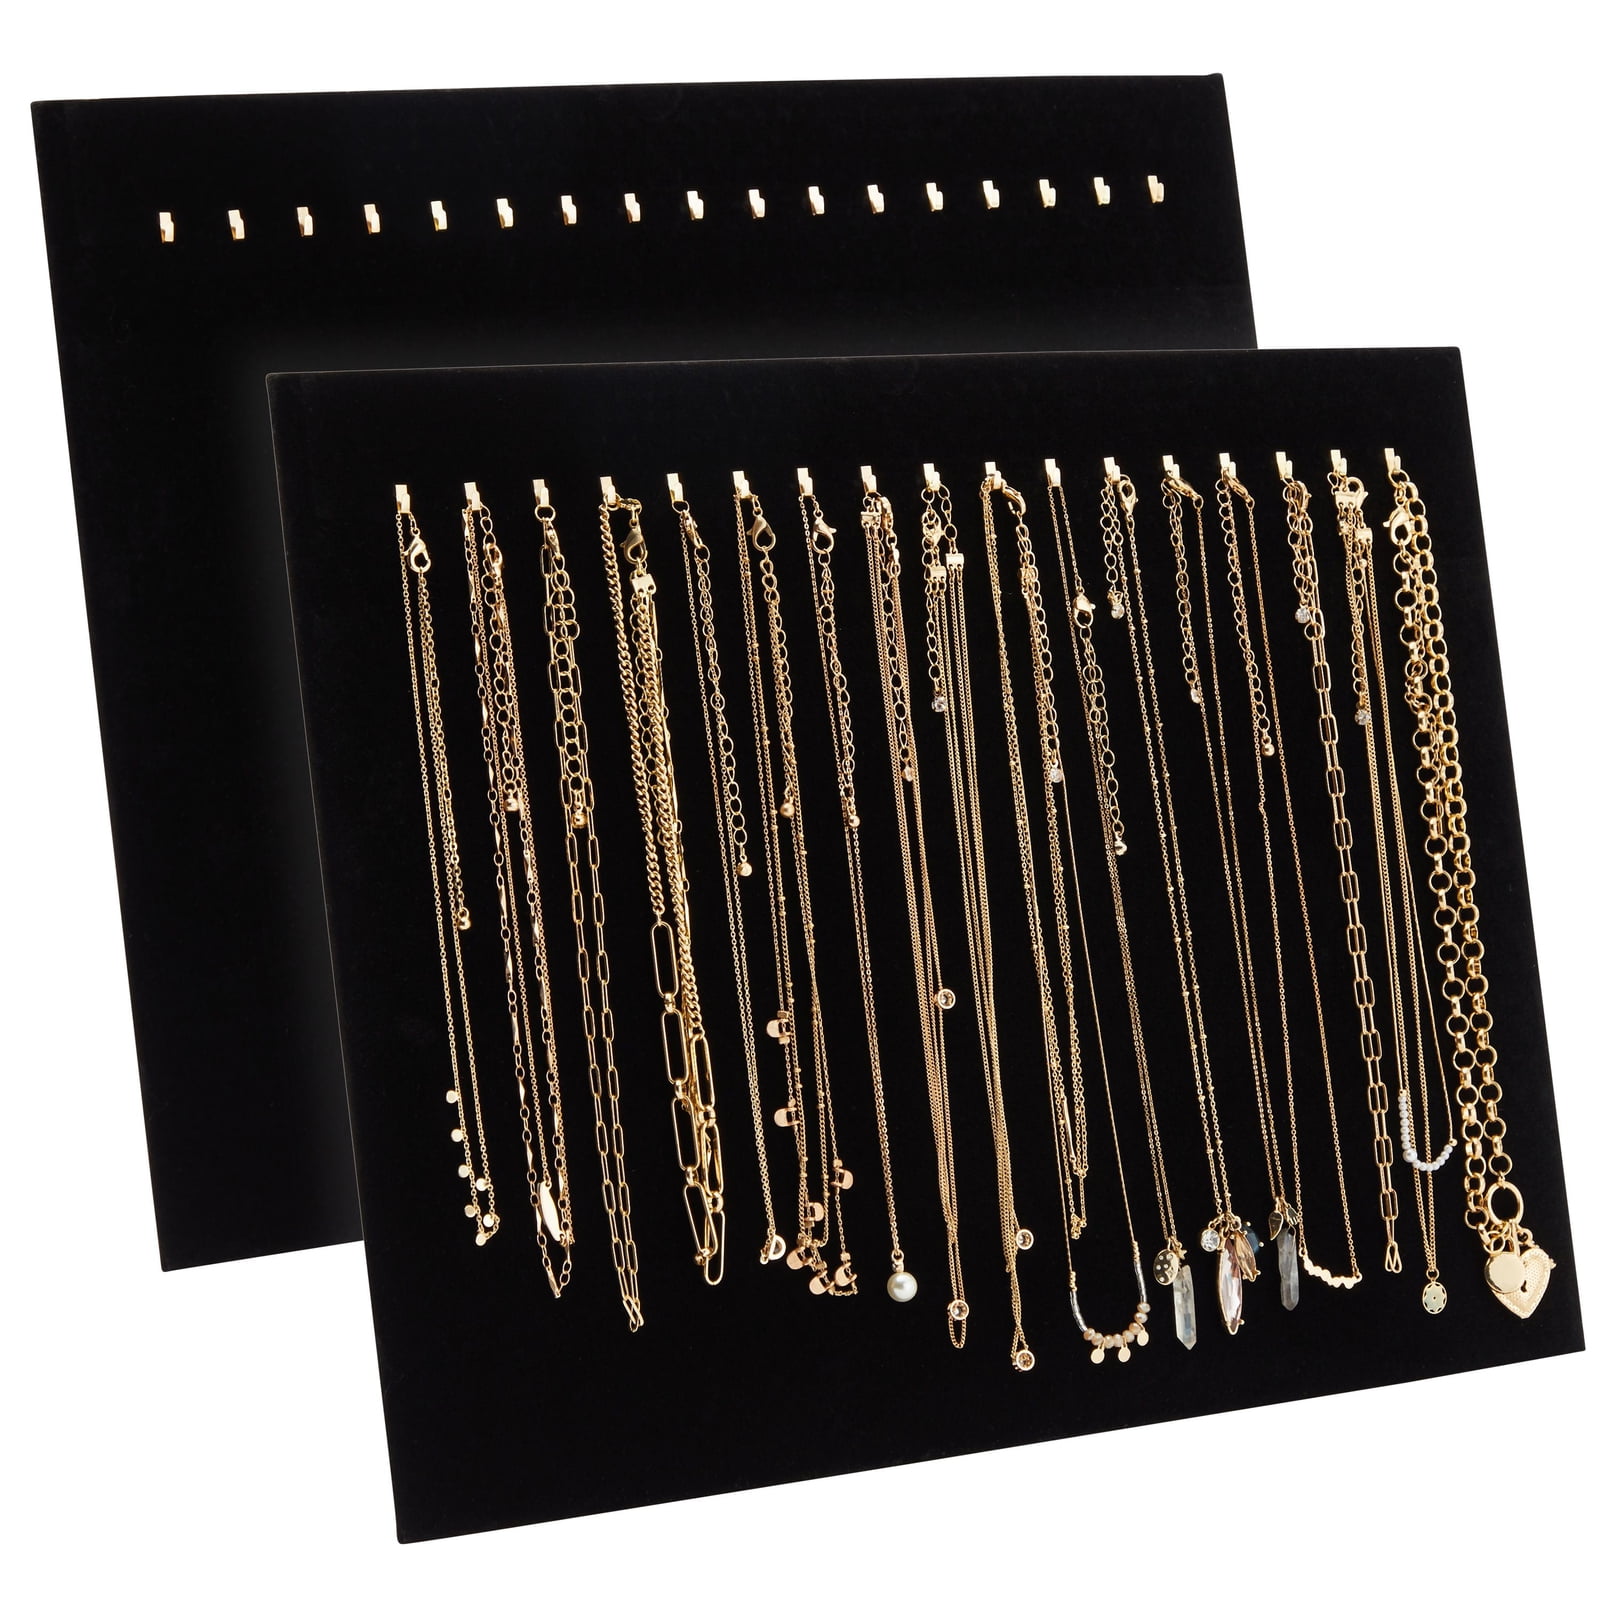 Glass Top Lid 72 Ring Grey Jewelry Sales Display Box Storage Case Bonus Items 